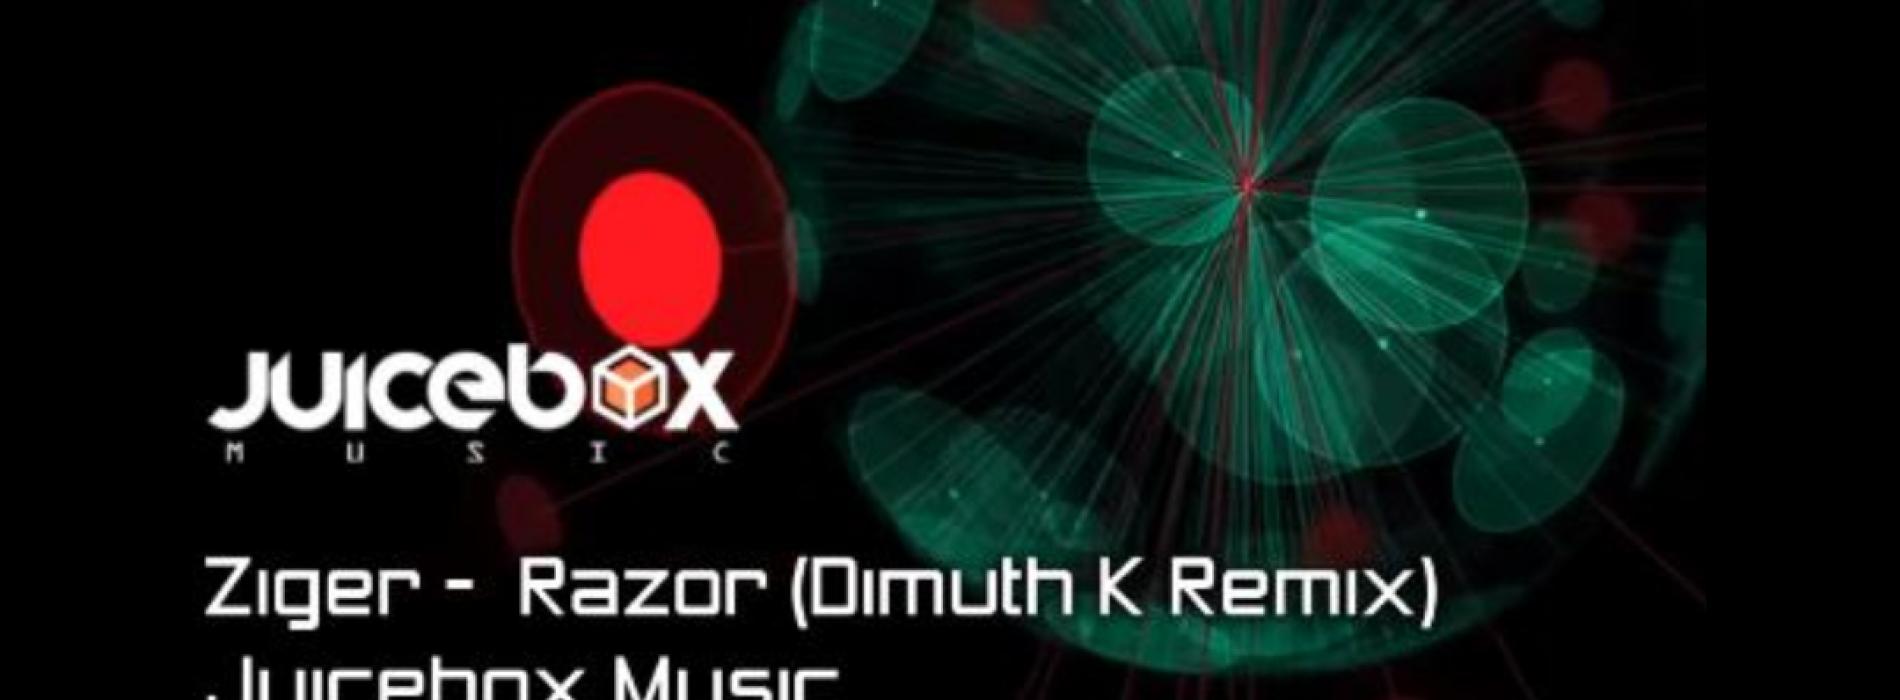 Ziger – Razor (Dimuth K Remix)[Juicebox Music]